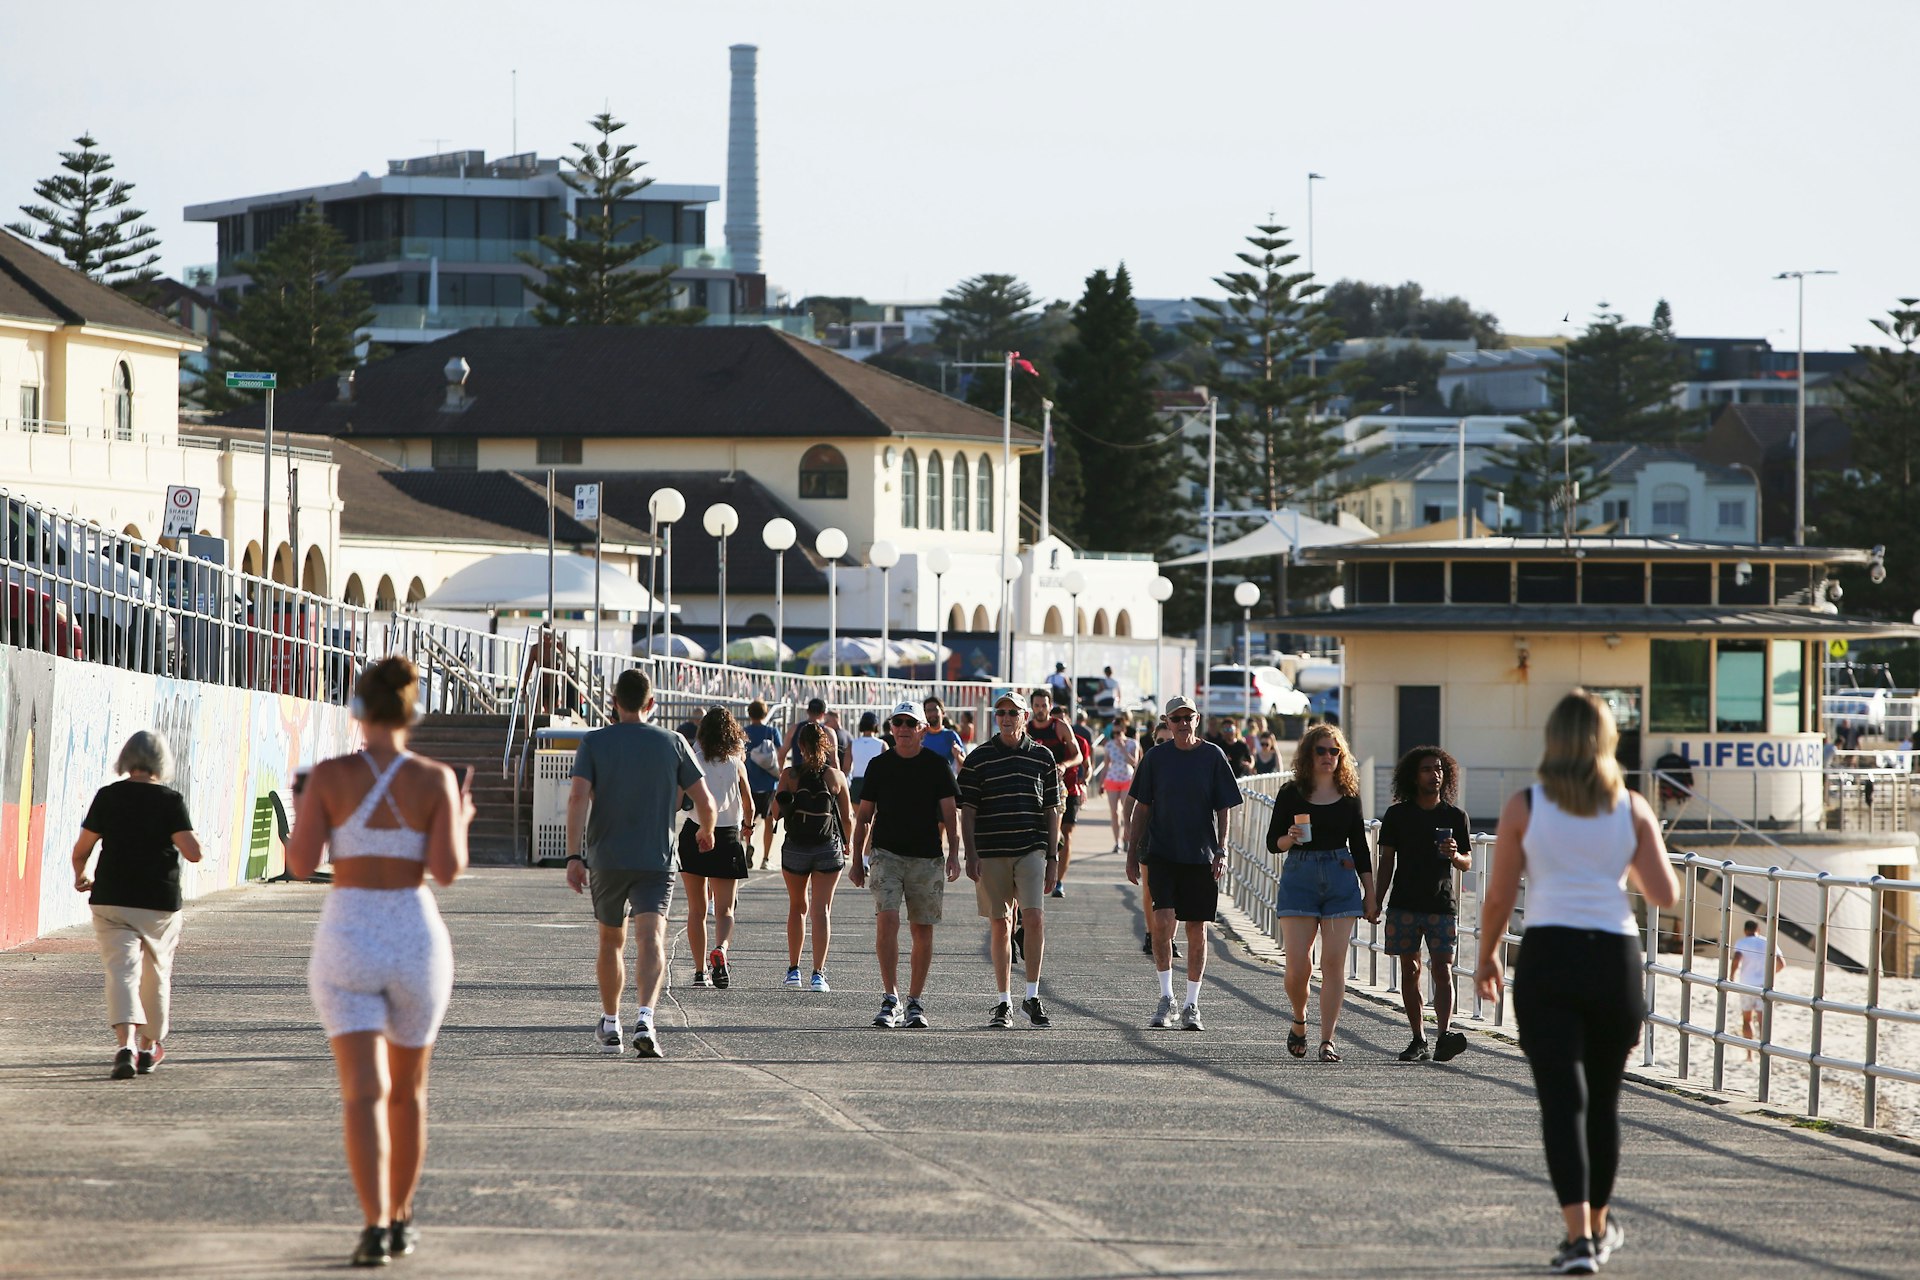 People, wearing summer gear, walk a path alongside a beach solo or in small groups 